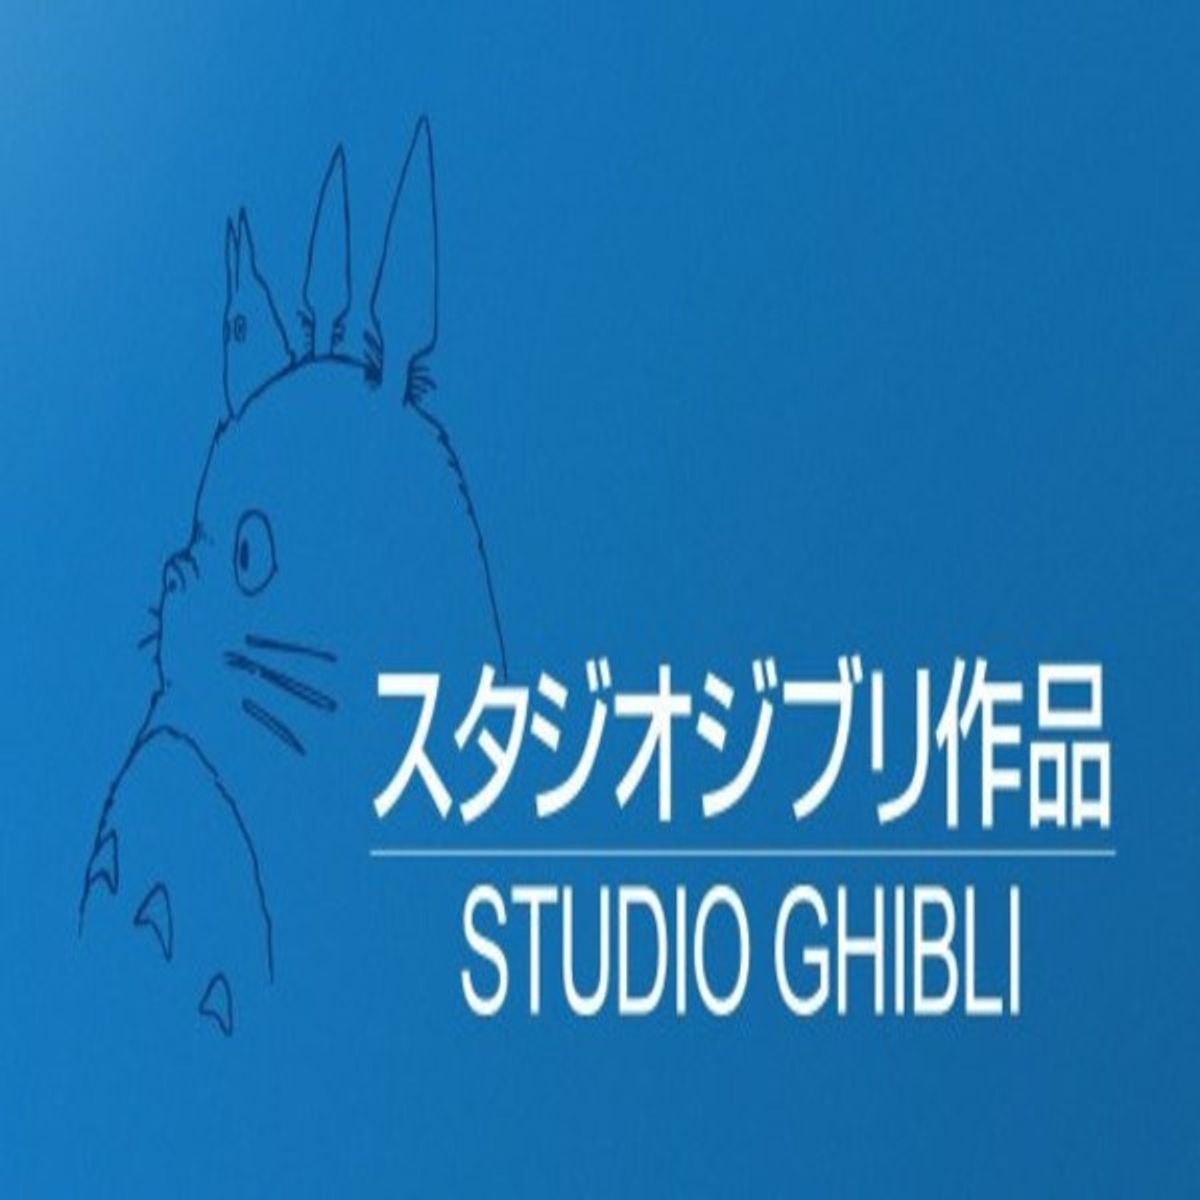 What Is Studio Ghibli And Why I Think Its Amazing